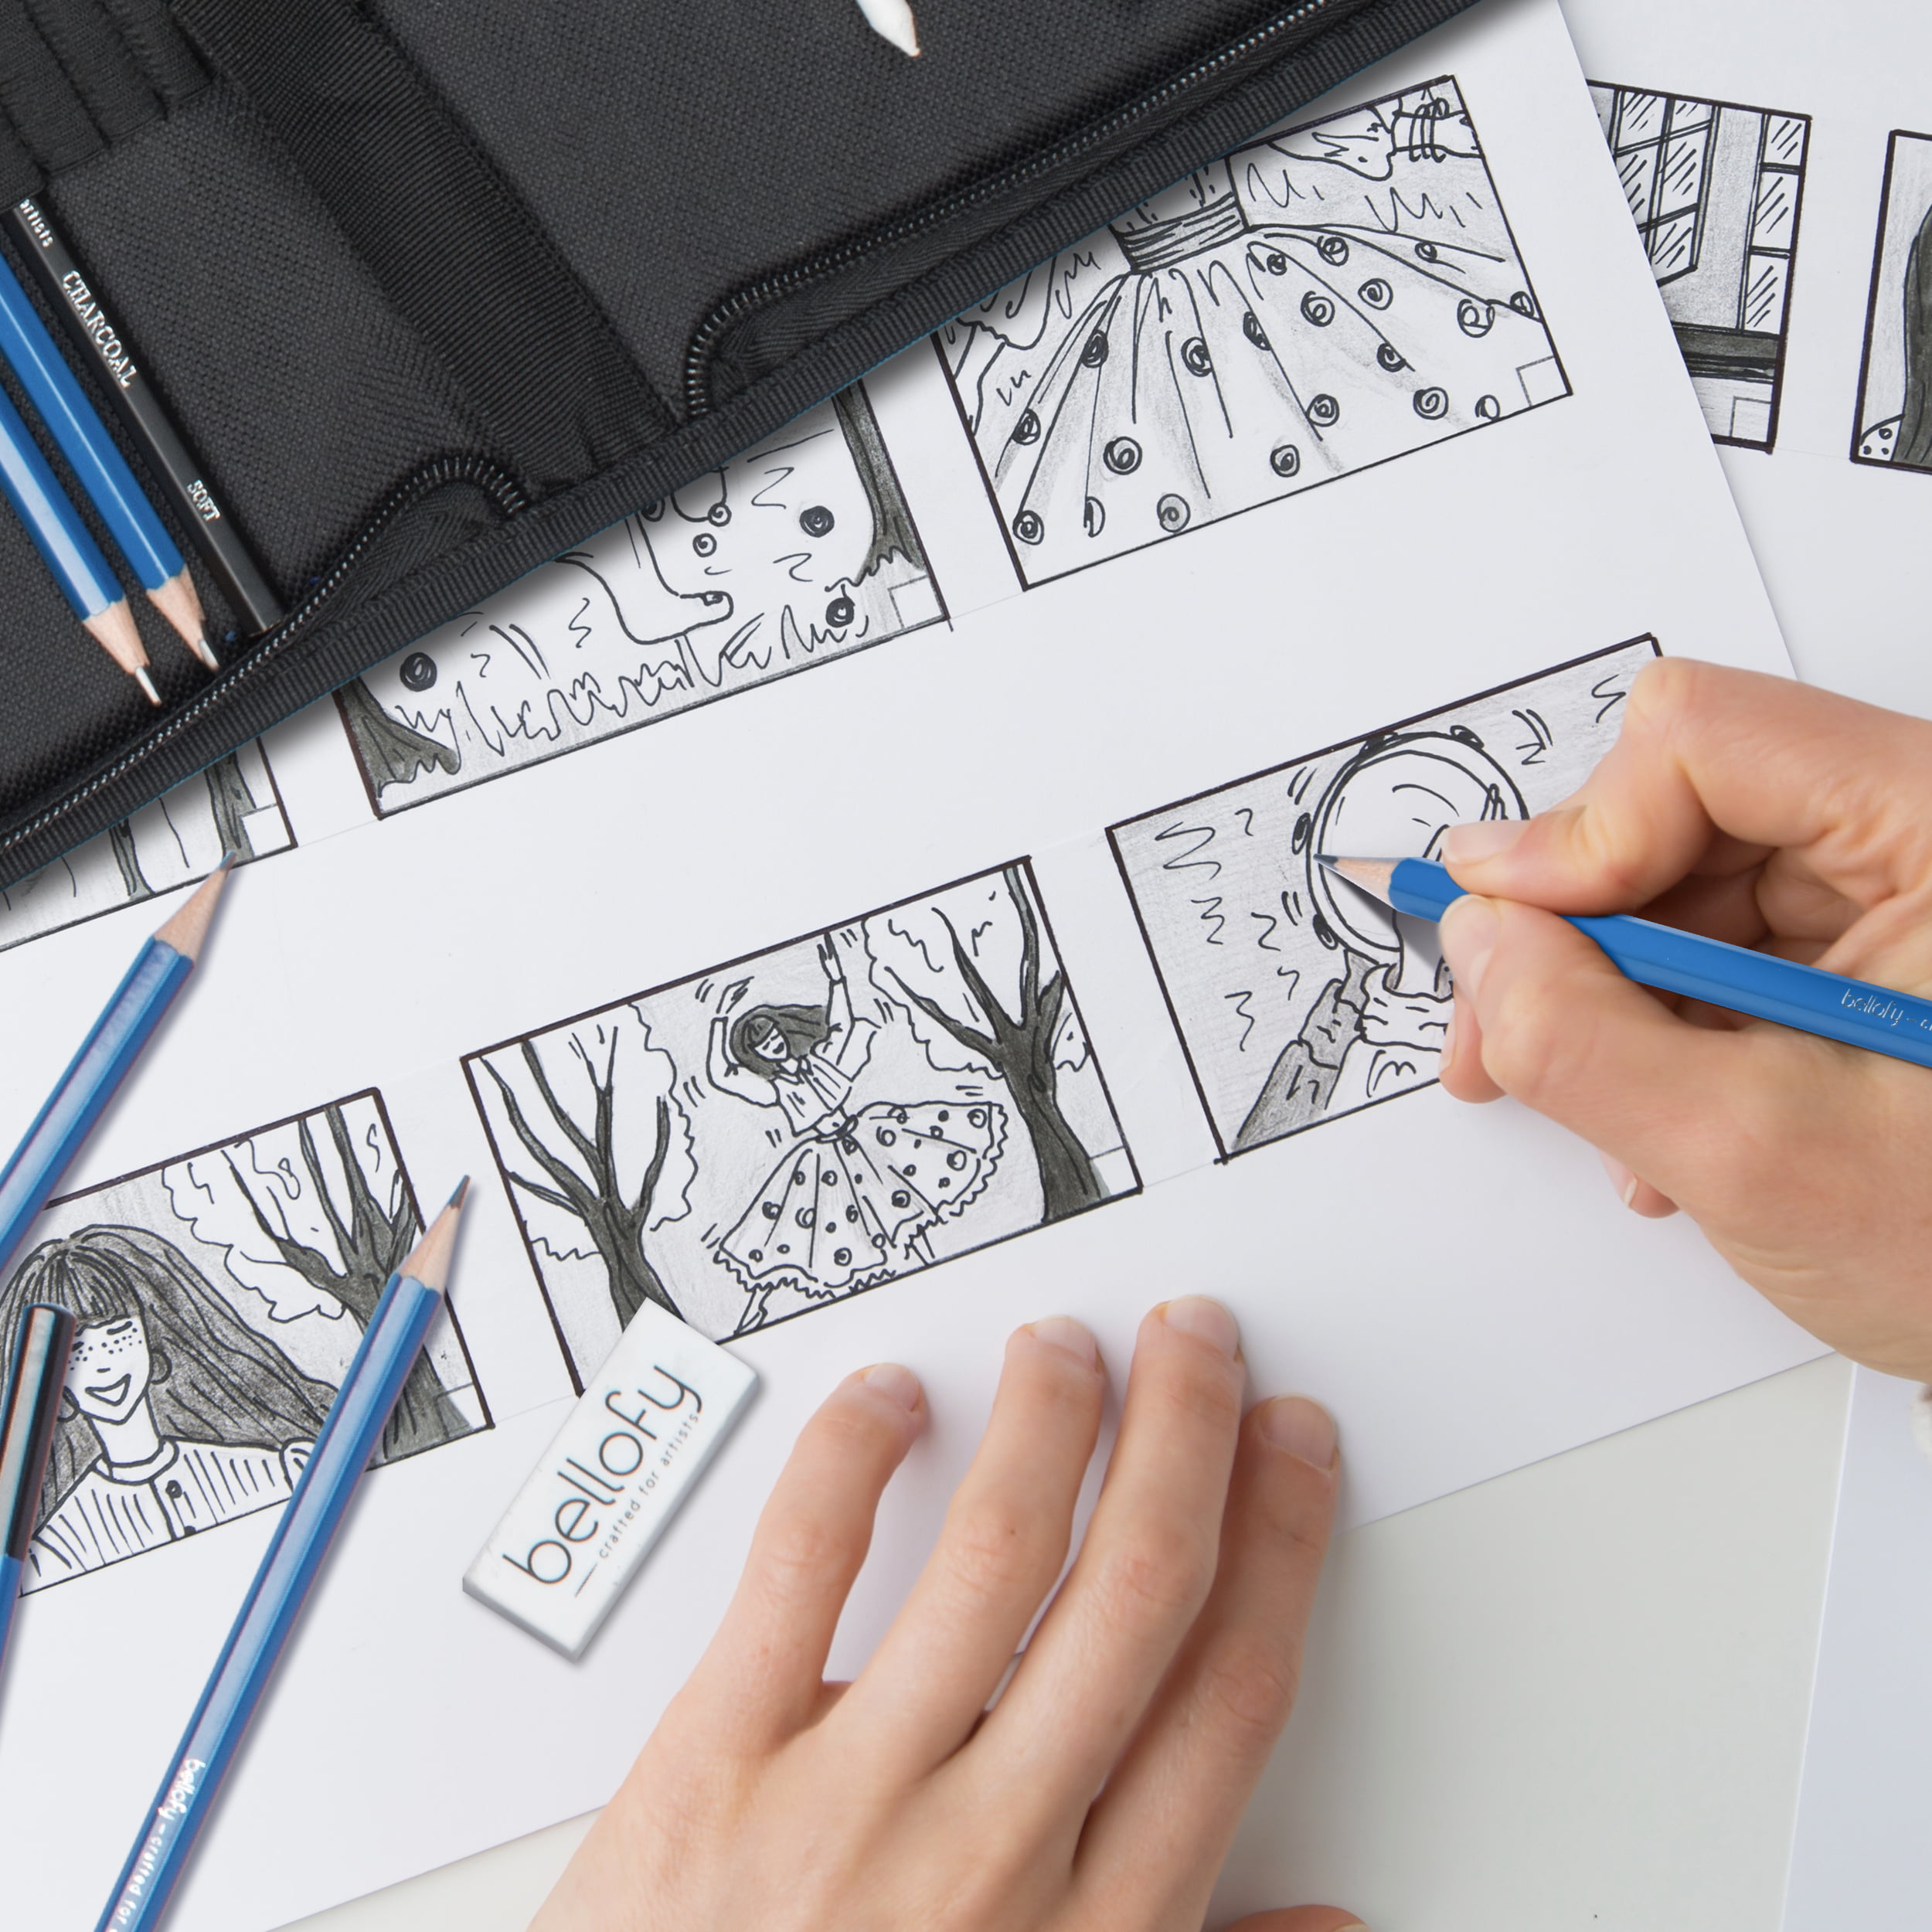 Glokers 33-Piece Drawing Art Set Drawing Sketch Pad, Shading Pencils